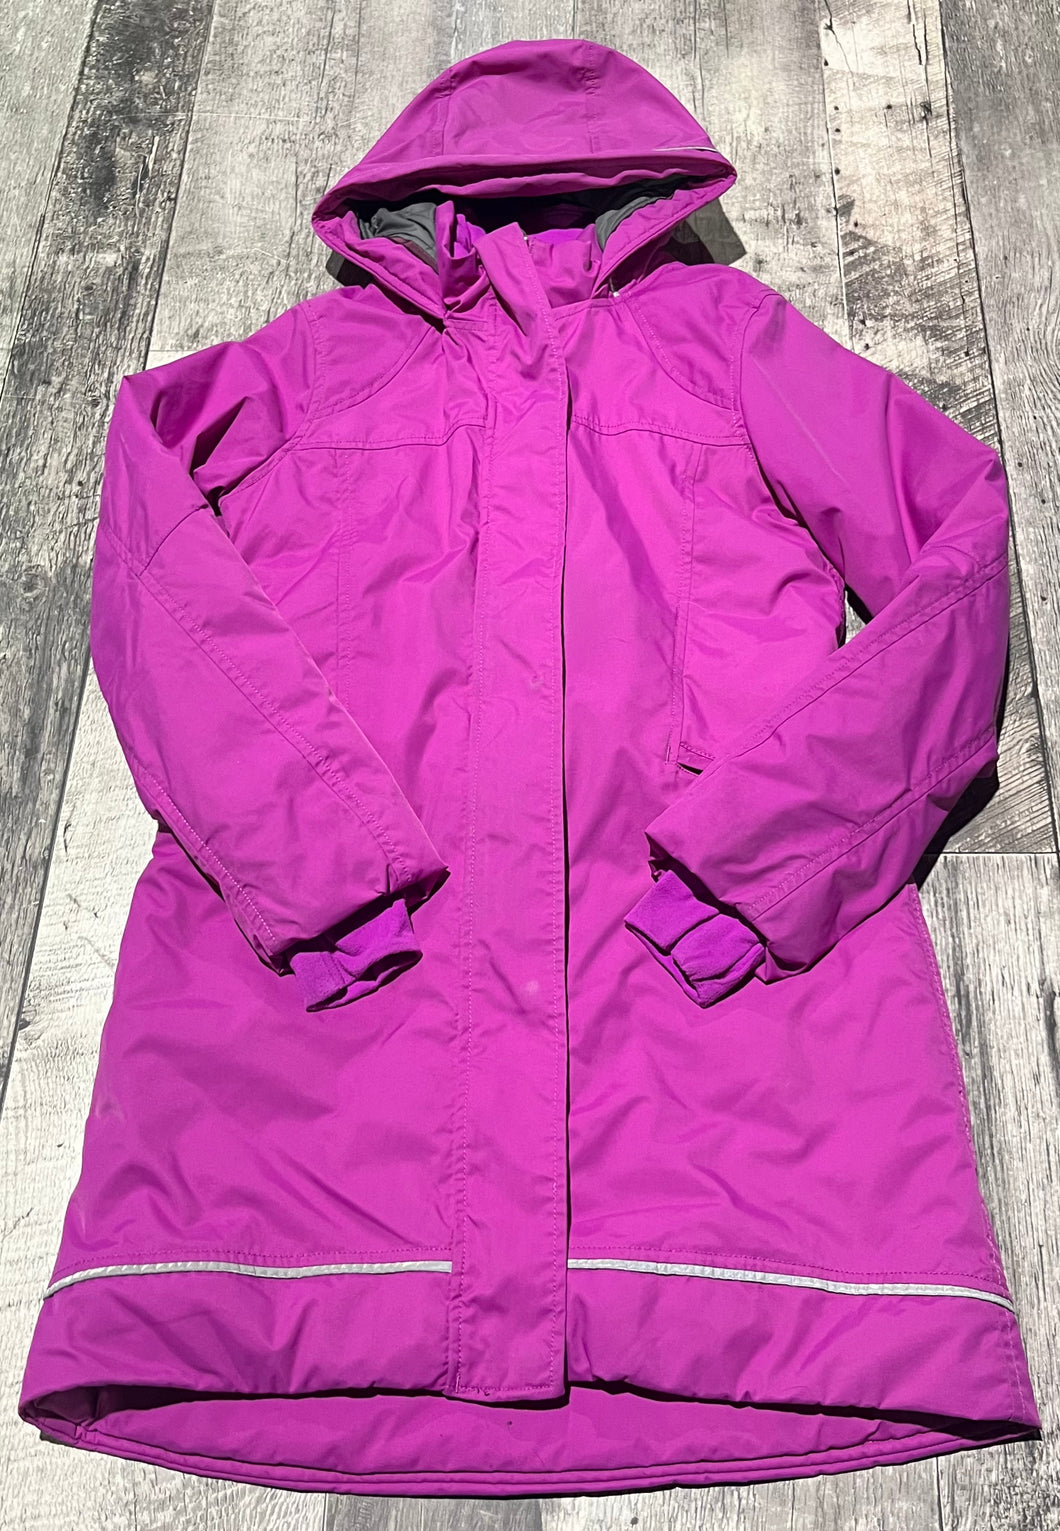 Iviva purple winter coat - Hers size 12